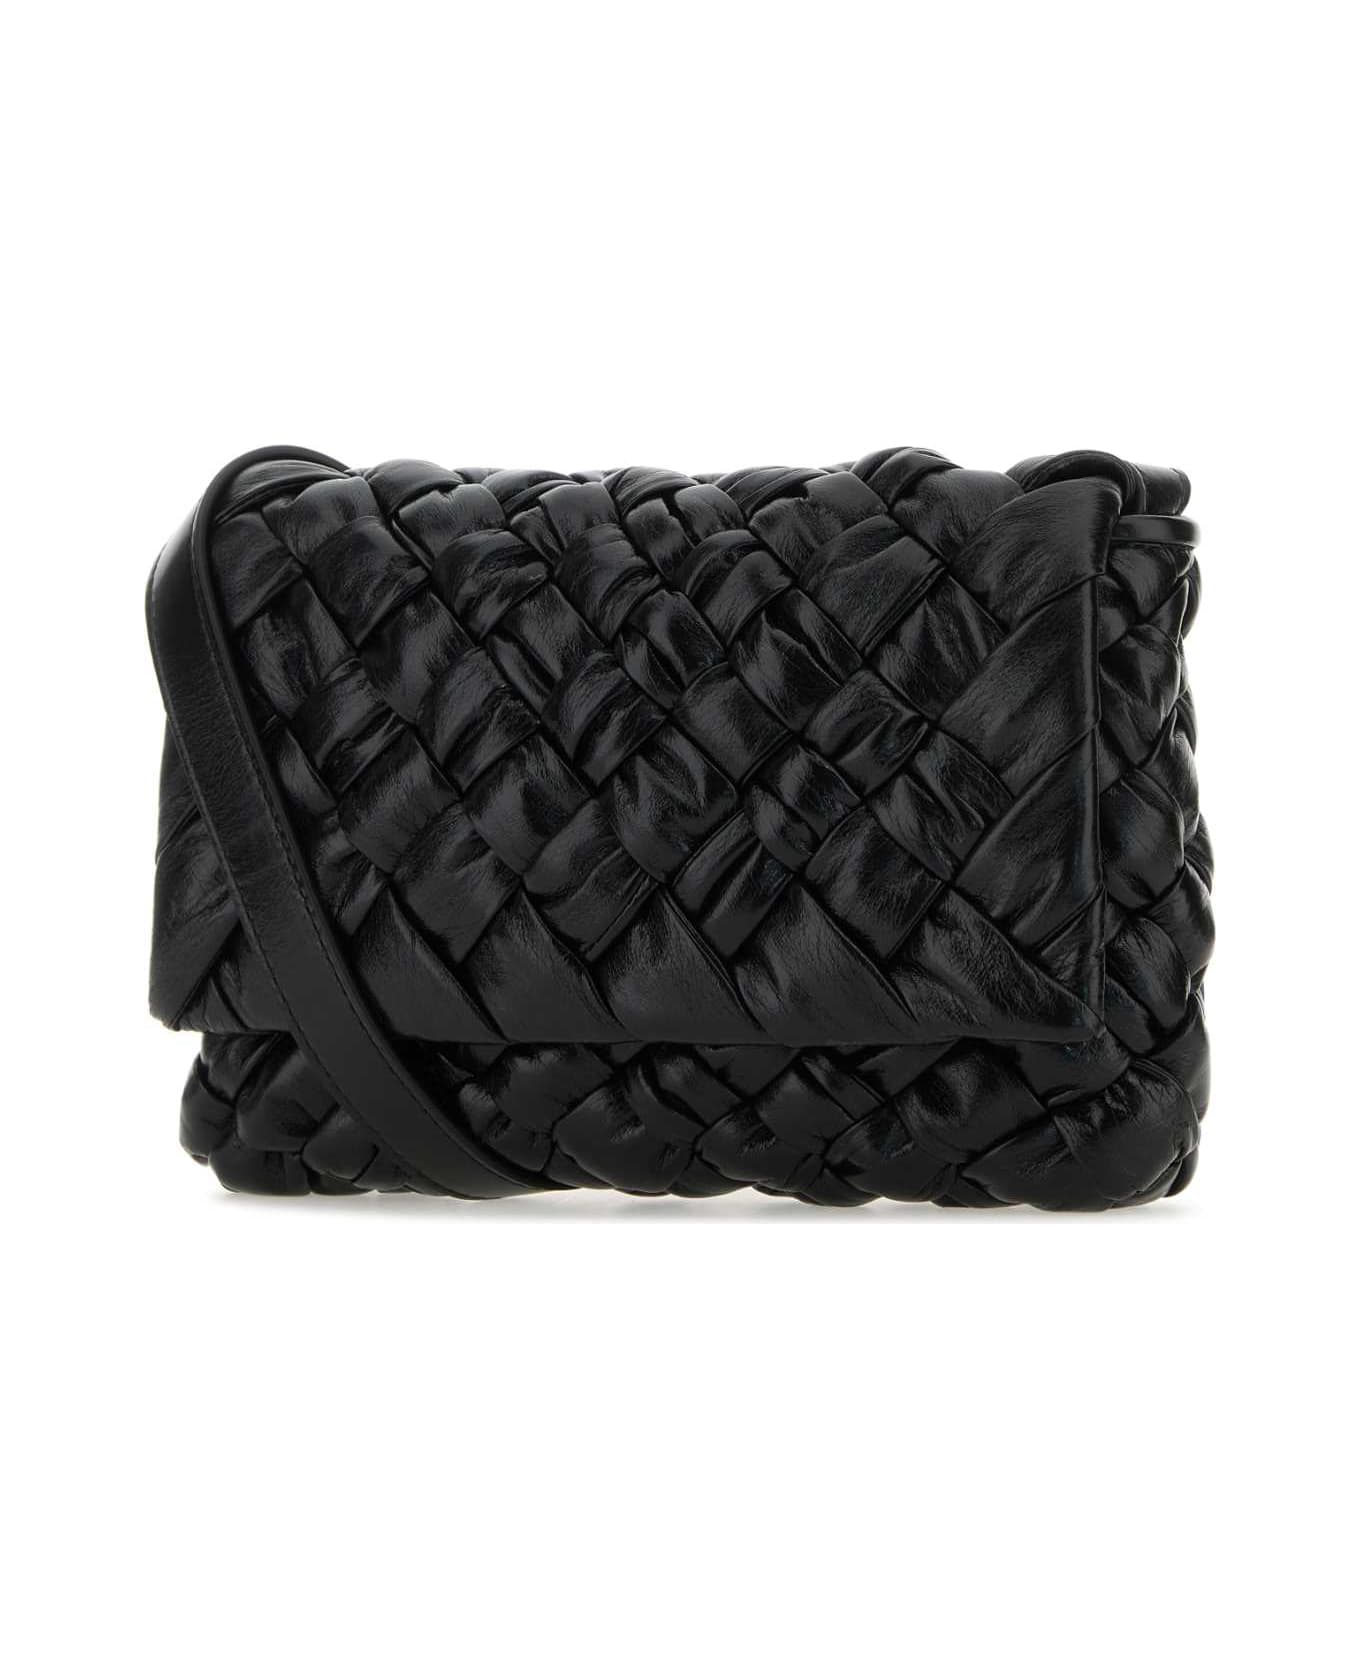 Bottega Veneta Black Leather Crossbody Bag - BLACKSILVER ショルダーバッグ